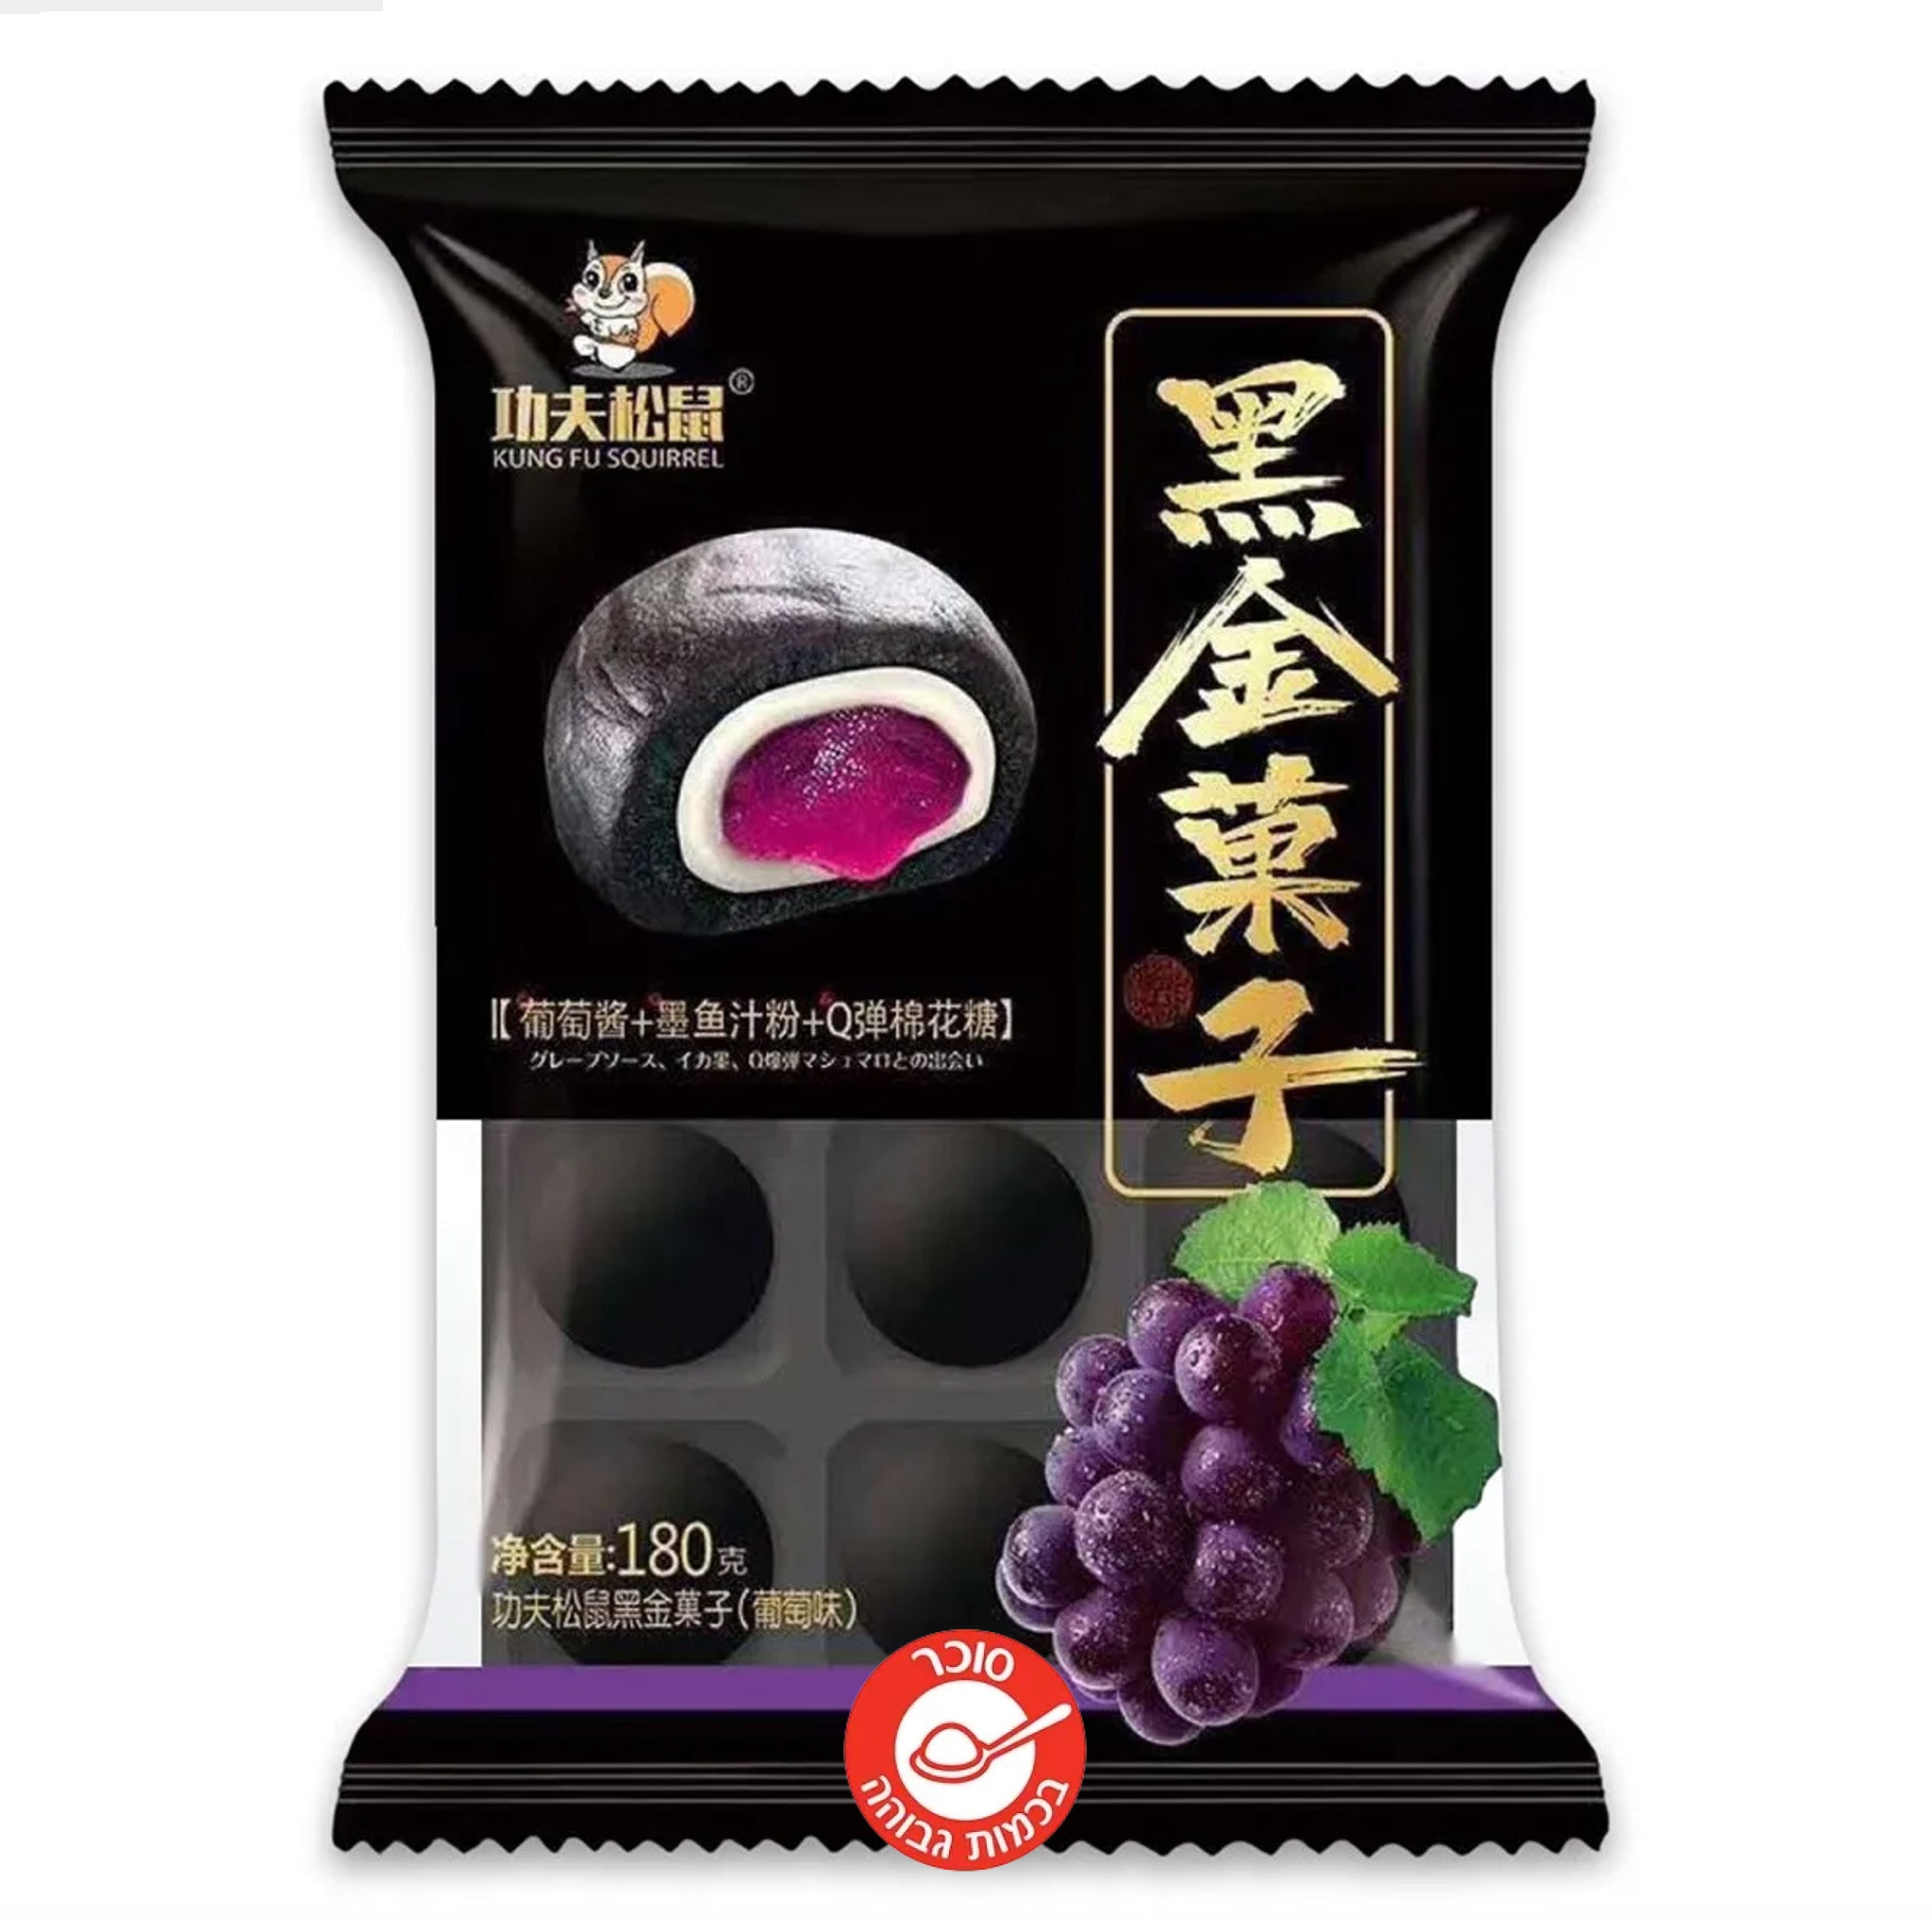 Black Mochi Grapes מוצ'י שחור במילוי בטעם ענבים